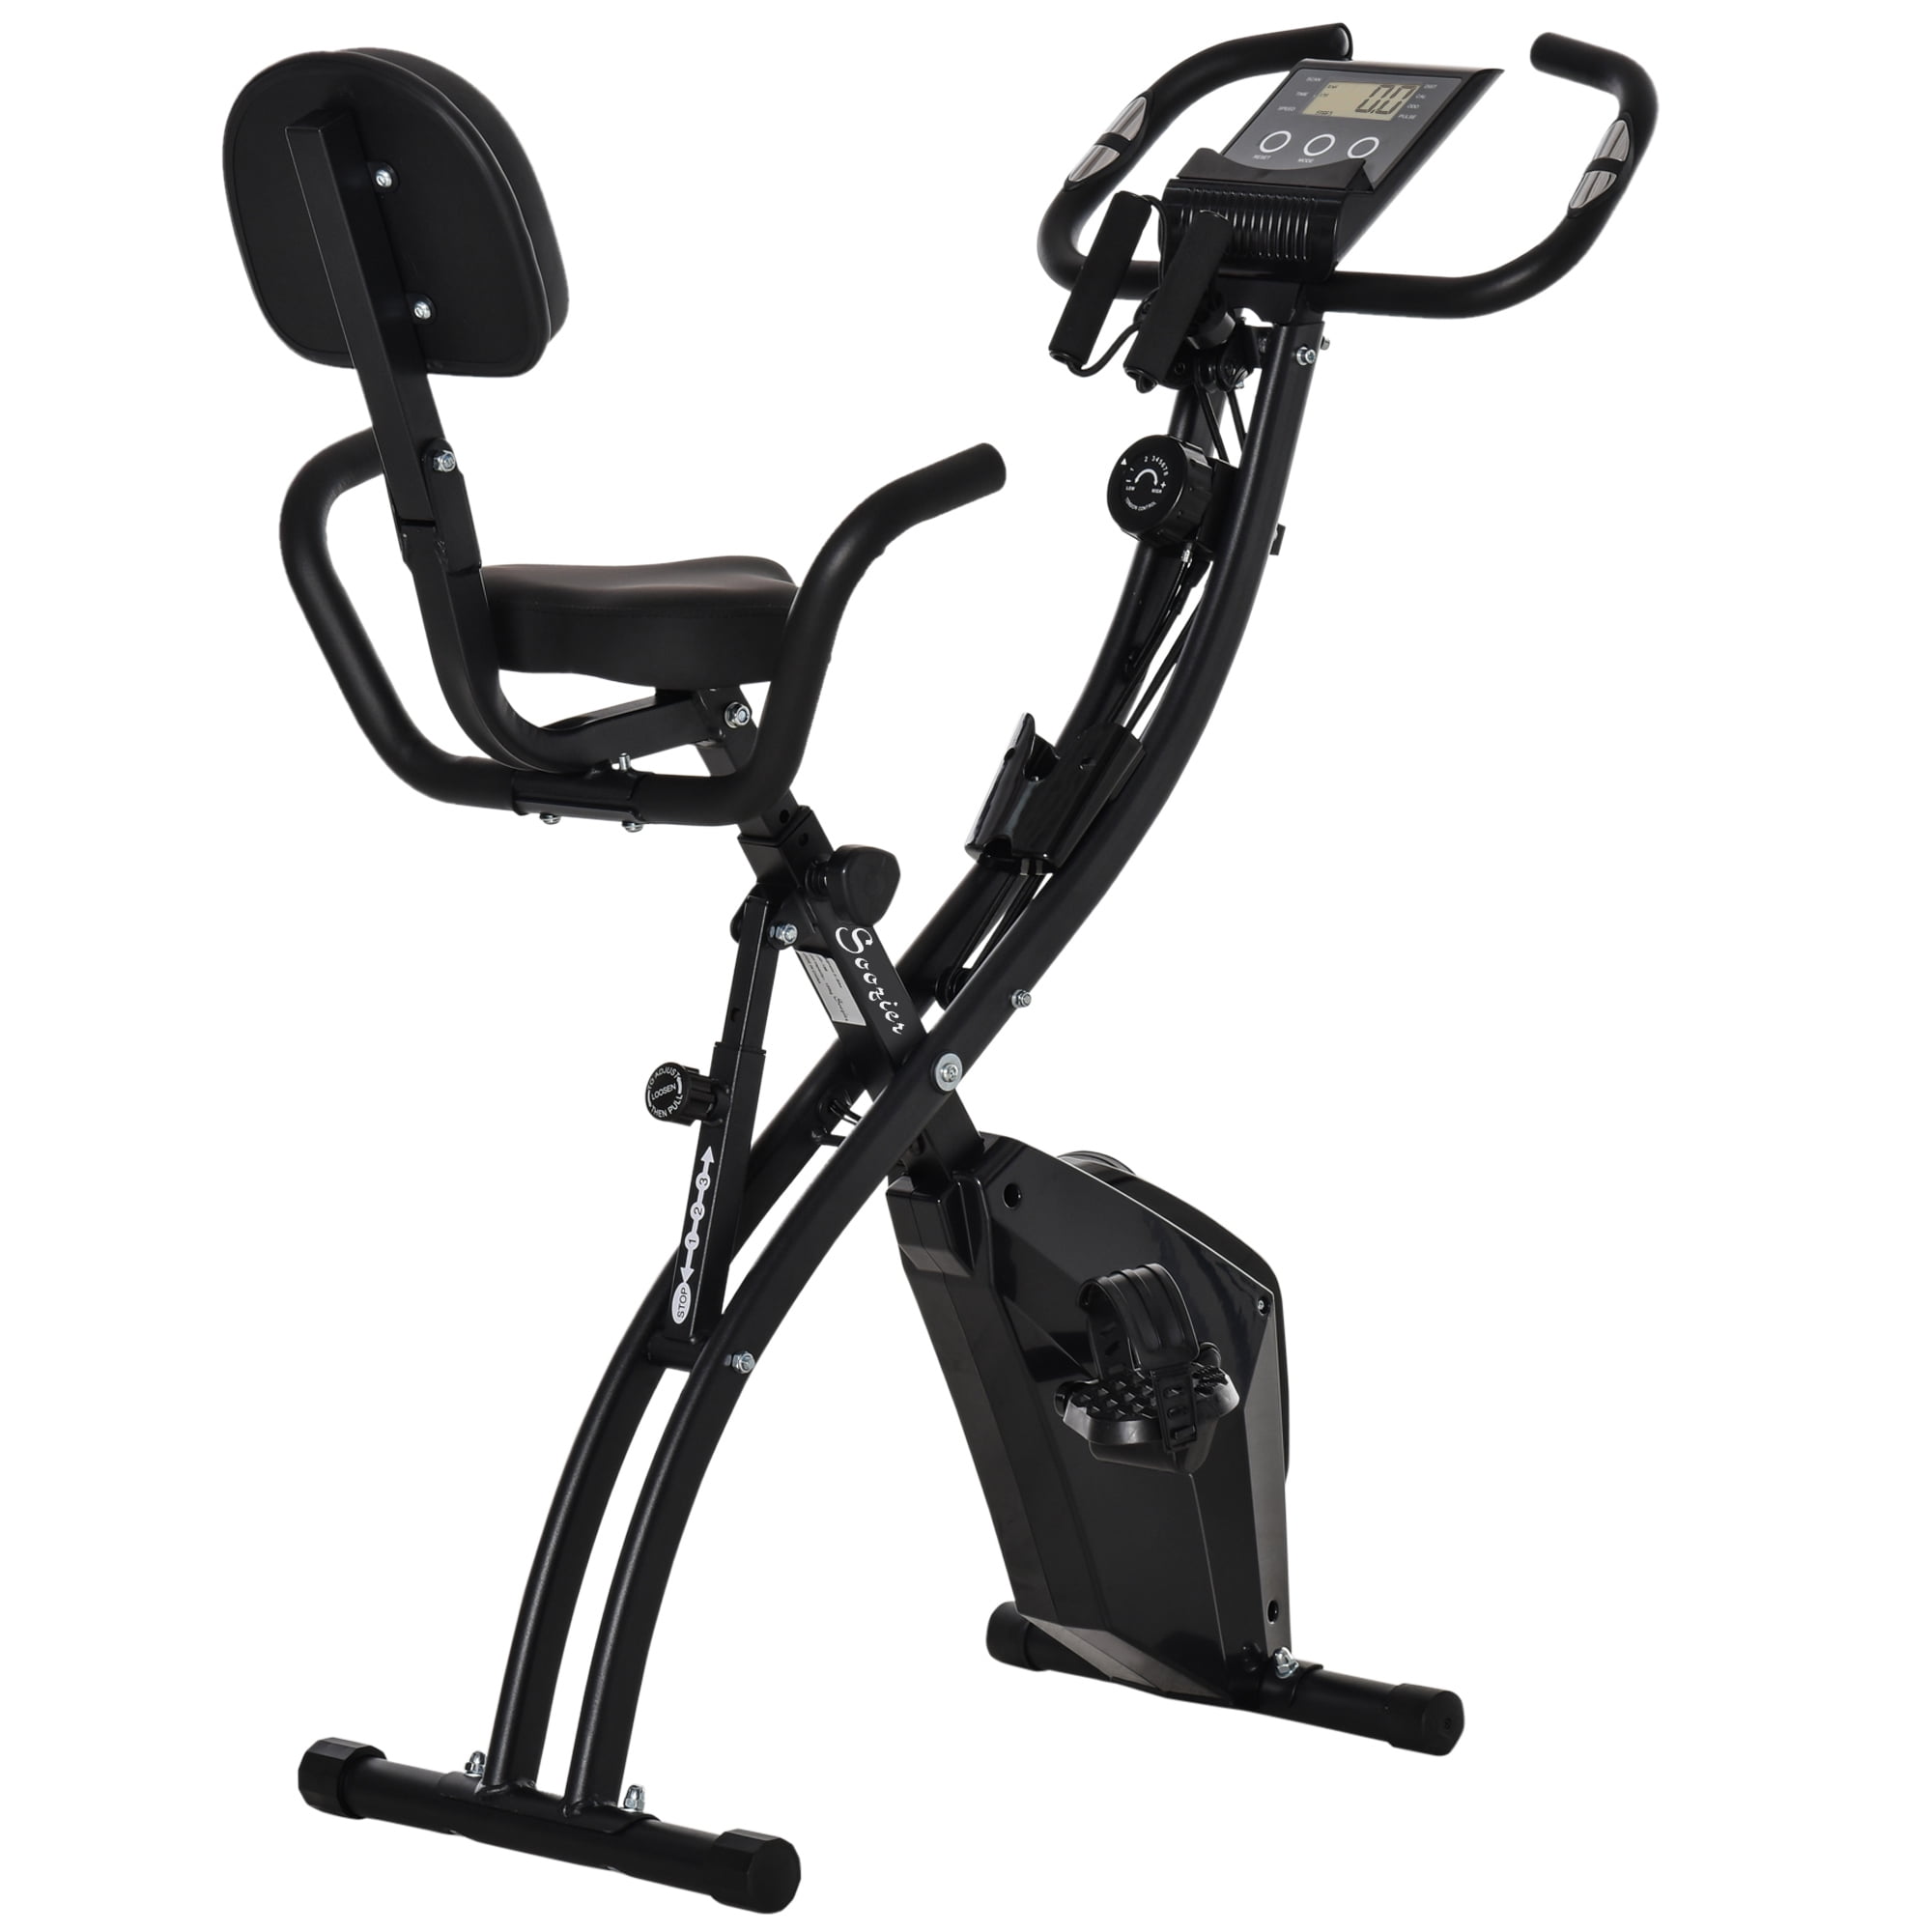 Soozier Folding Exercise Bike, 3-in-1 Recumbent Exercise Bike, Upright Workout Bike &amp; Arm Resistance Bands, Adjustable Seat, 8-Level Magnetic Resistance, Black